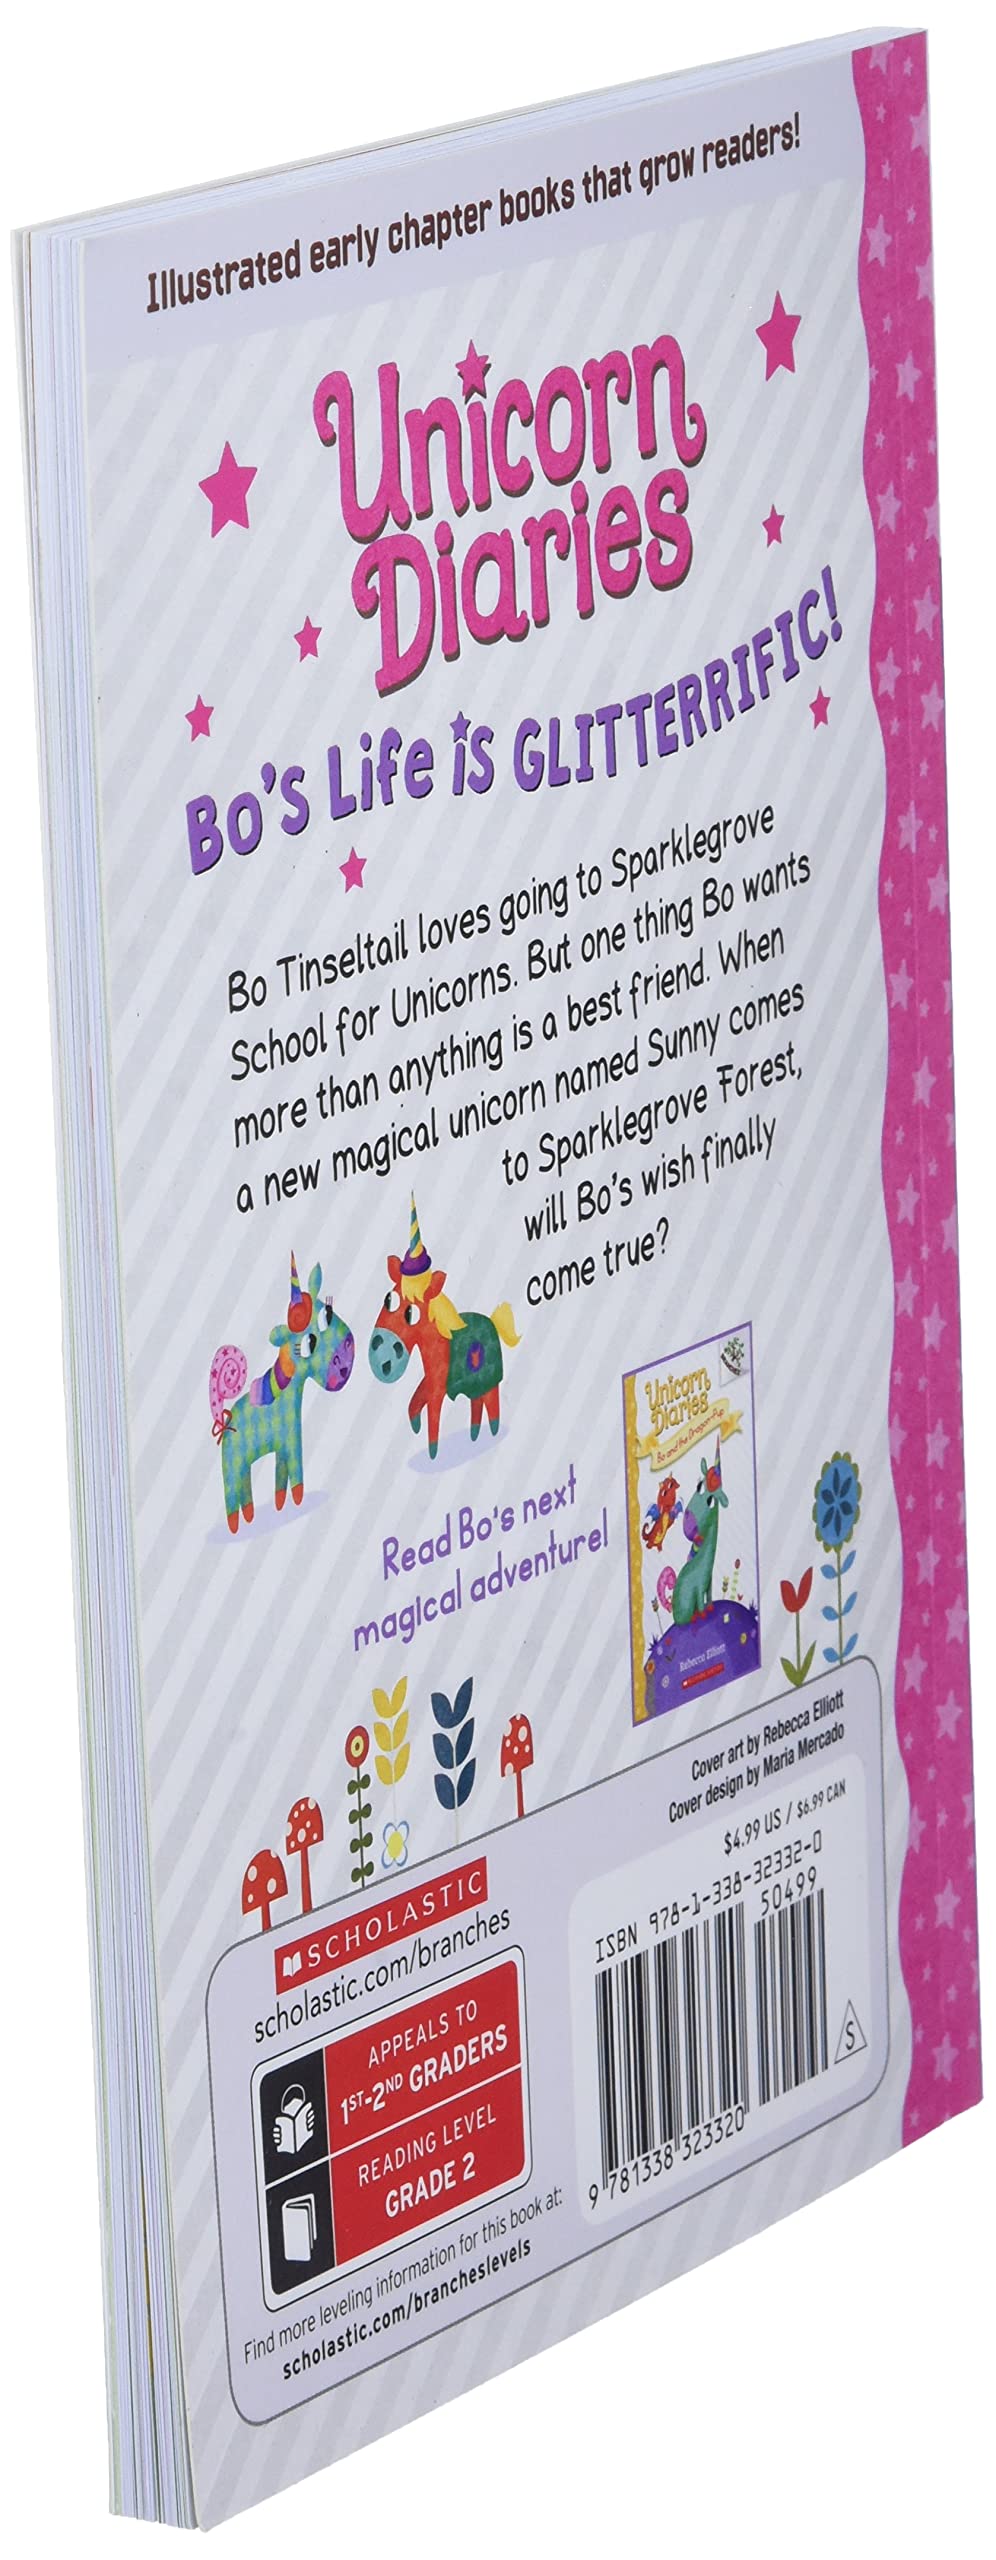 Bo's Magical New Friend: A Branches Book (Unicorn Diaries #1)